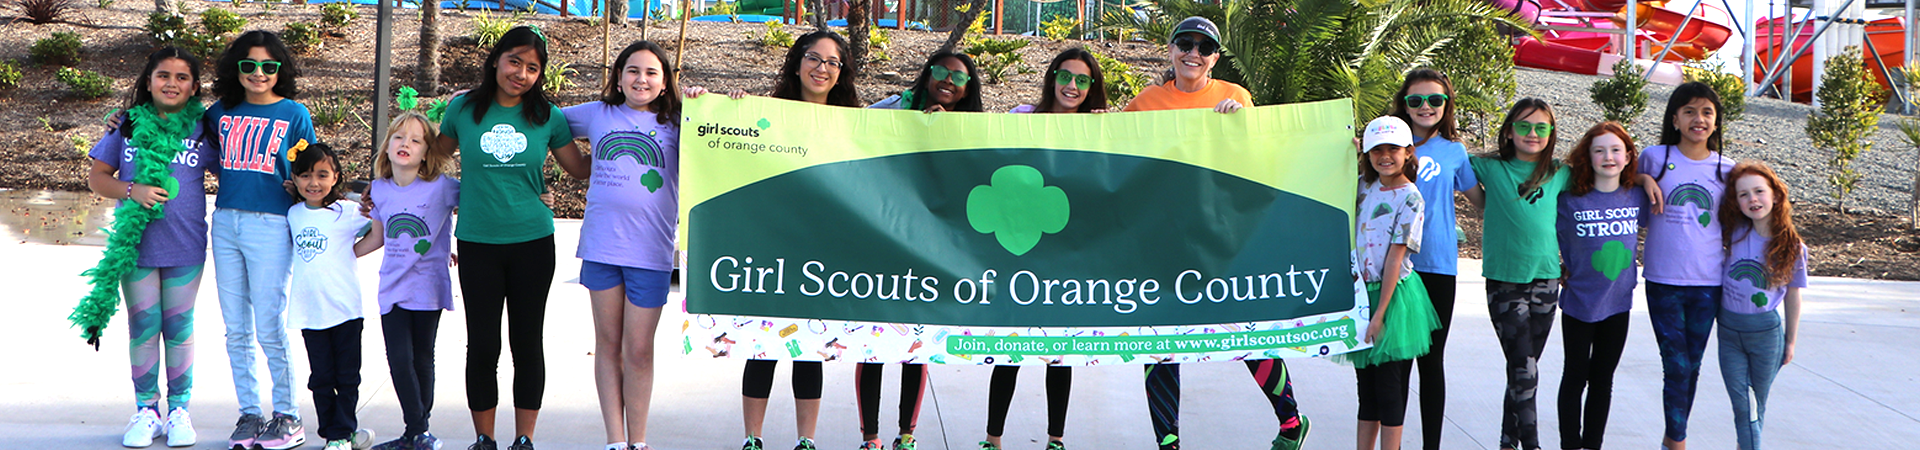  Girl Scouts of Orange County's Trefoil Trot 